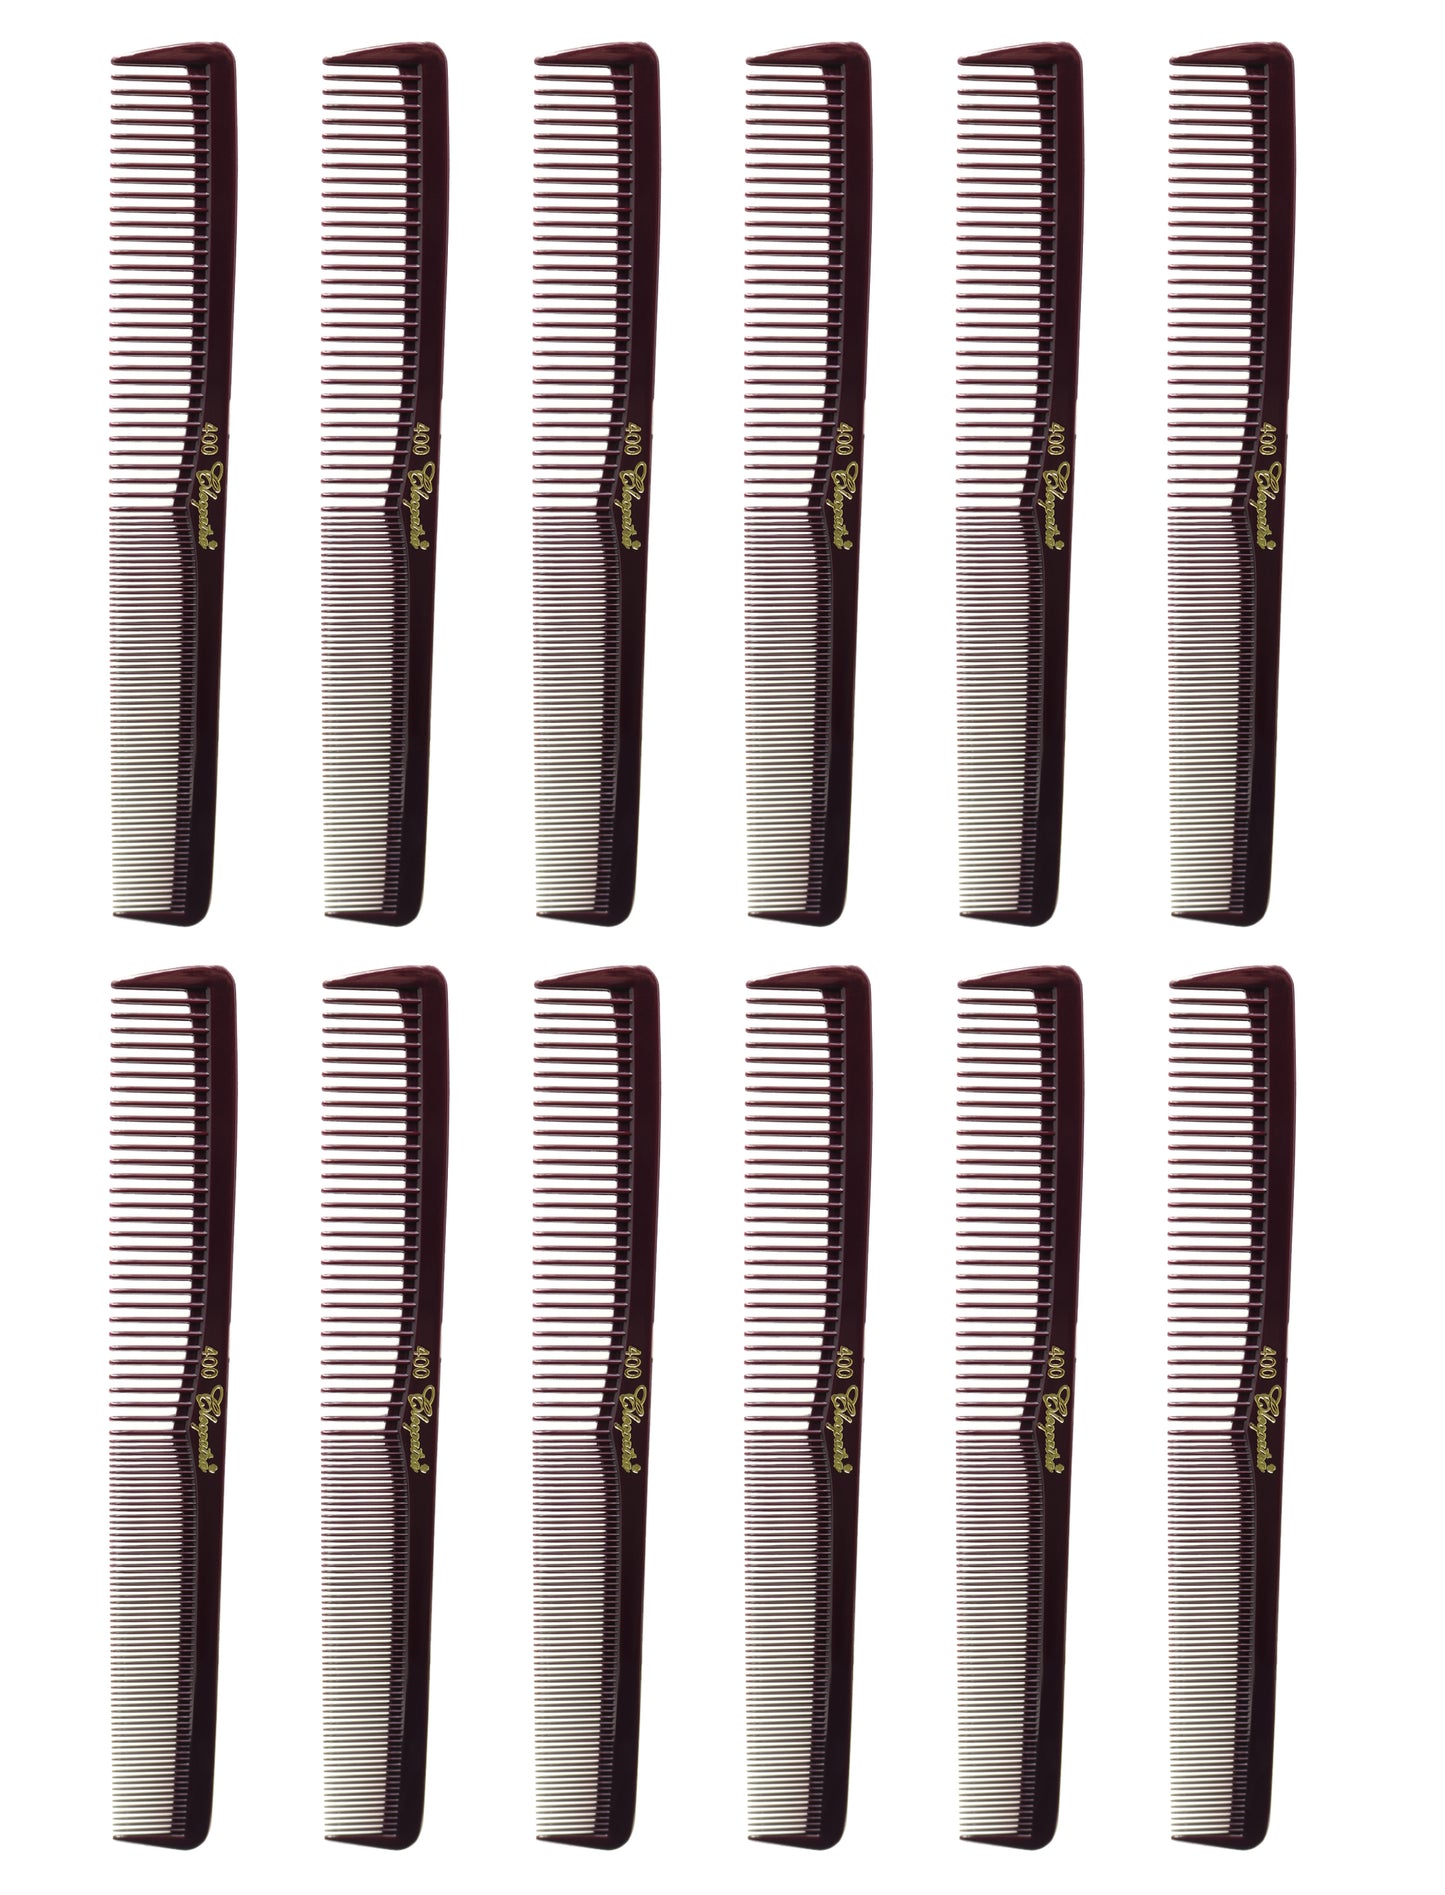 Krest Cleopatra 400 Hair Combs Barber Combs Cutting Combs Stylin Comb  1 DZ.